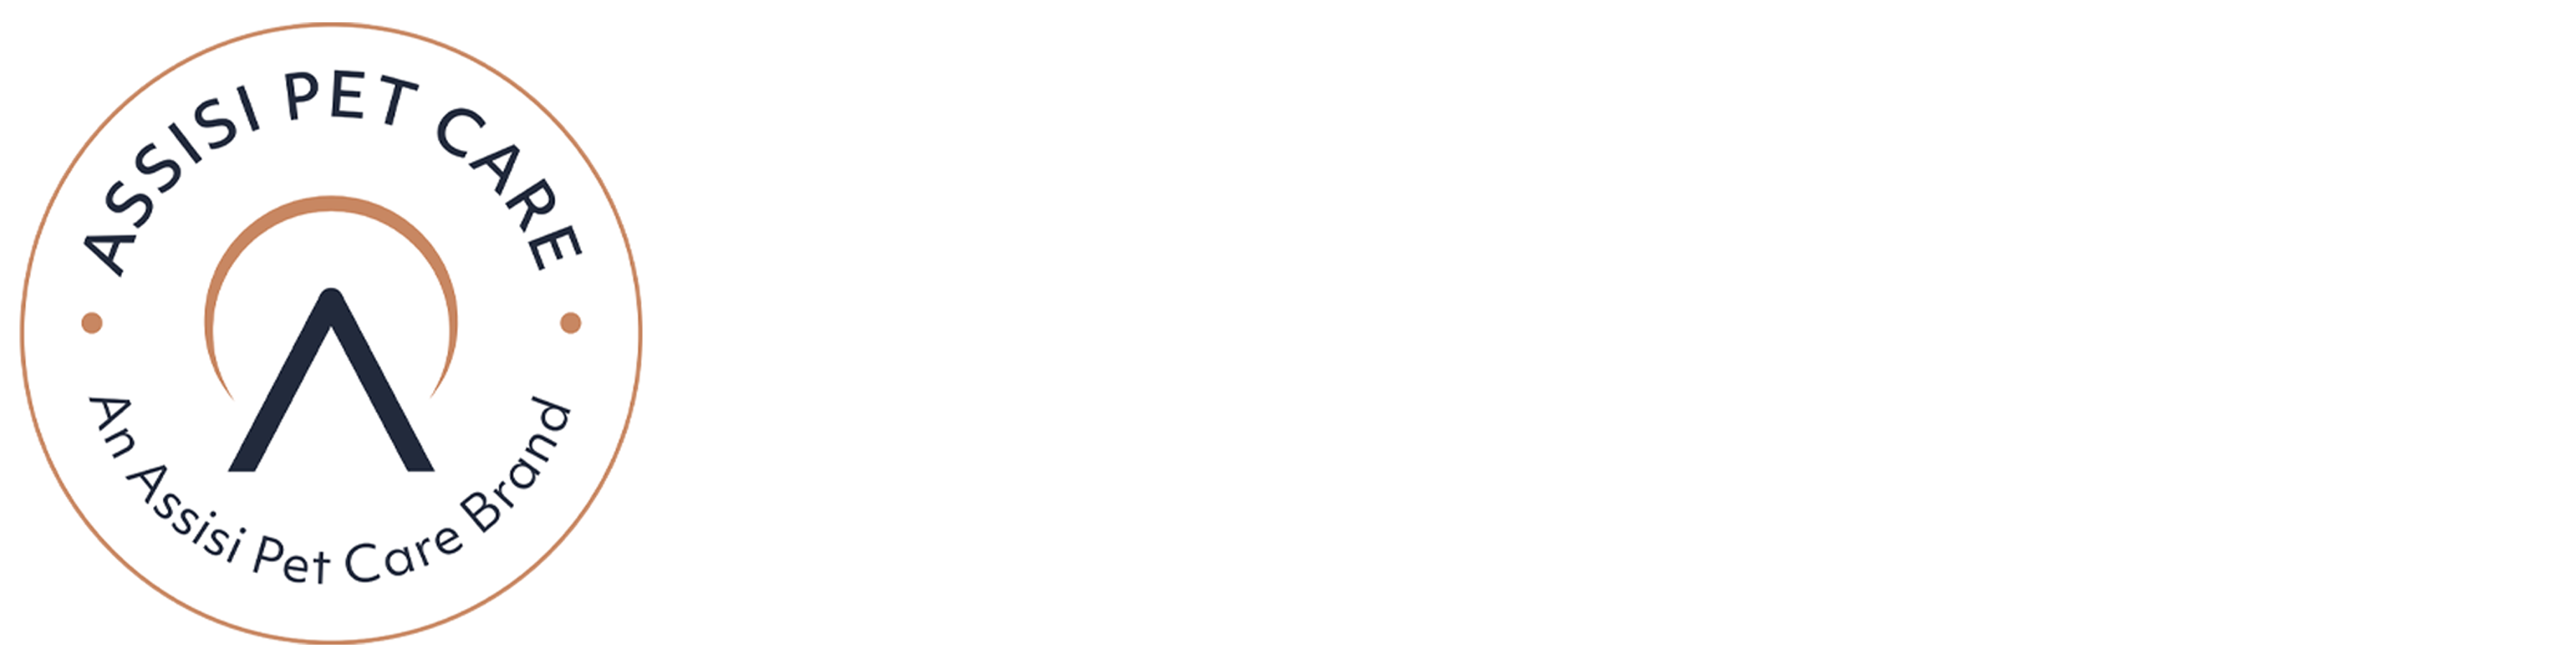 Pet Munchies Large Salmon Skin Chew Dog Treats 125g